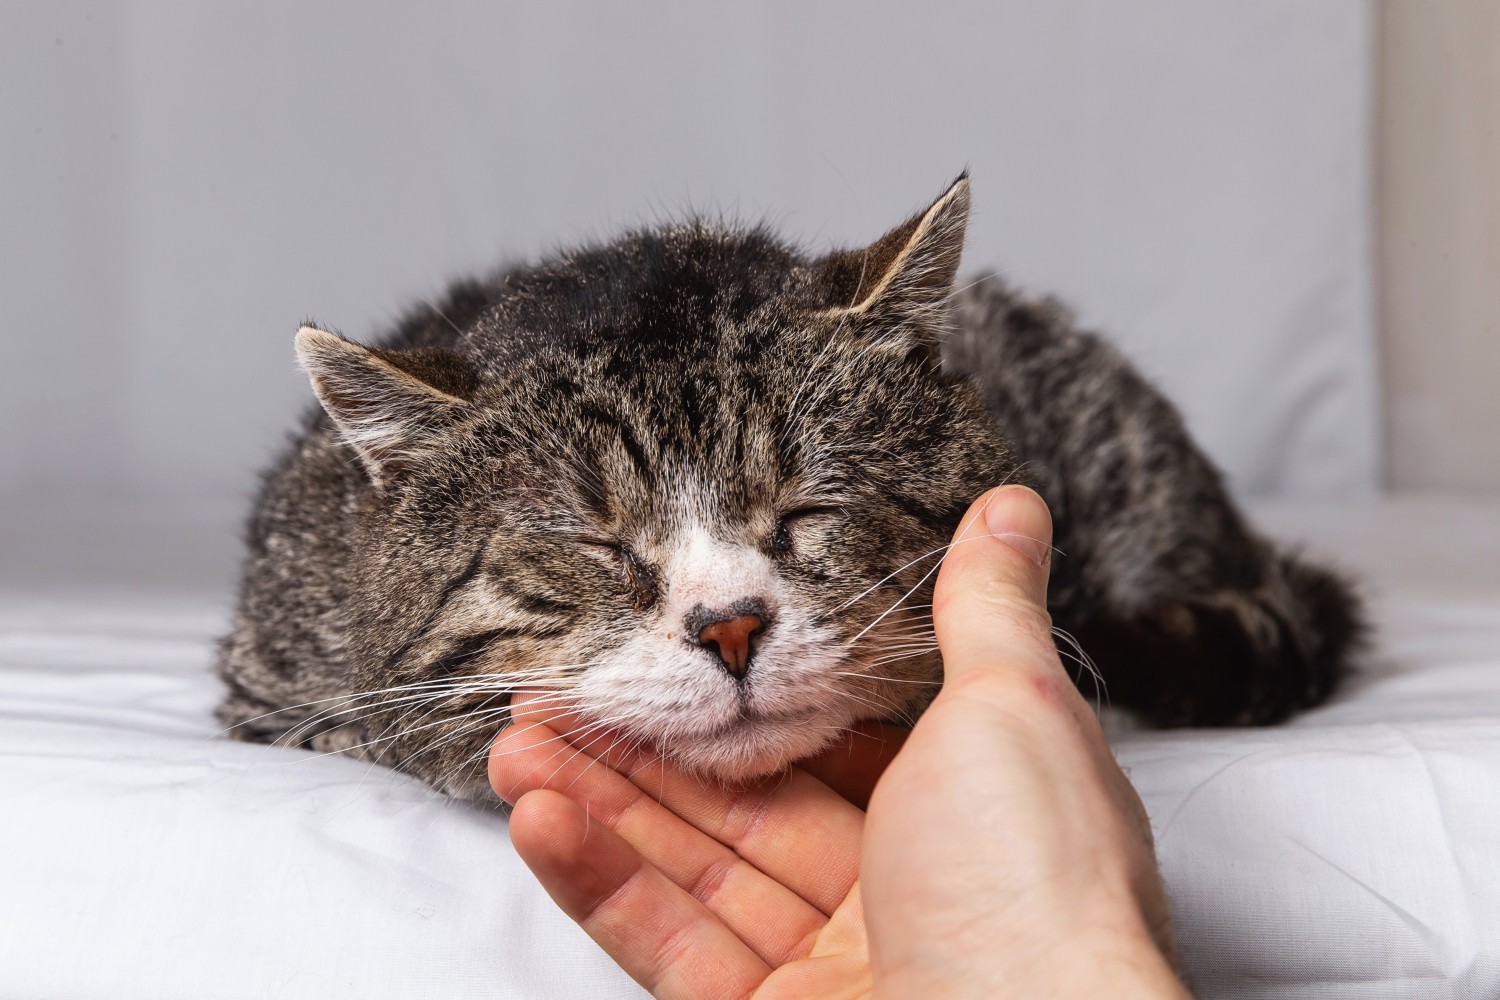 Senior Cat being pet by human